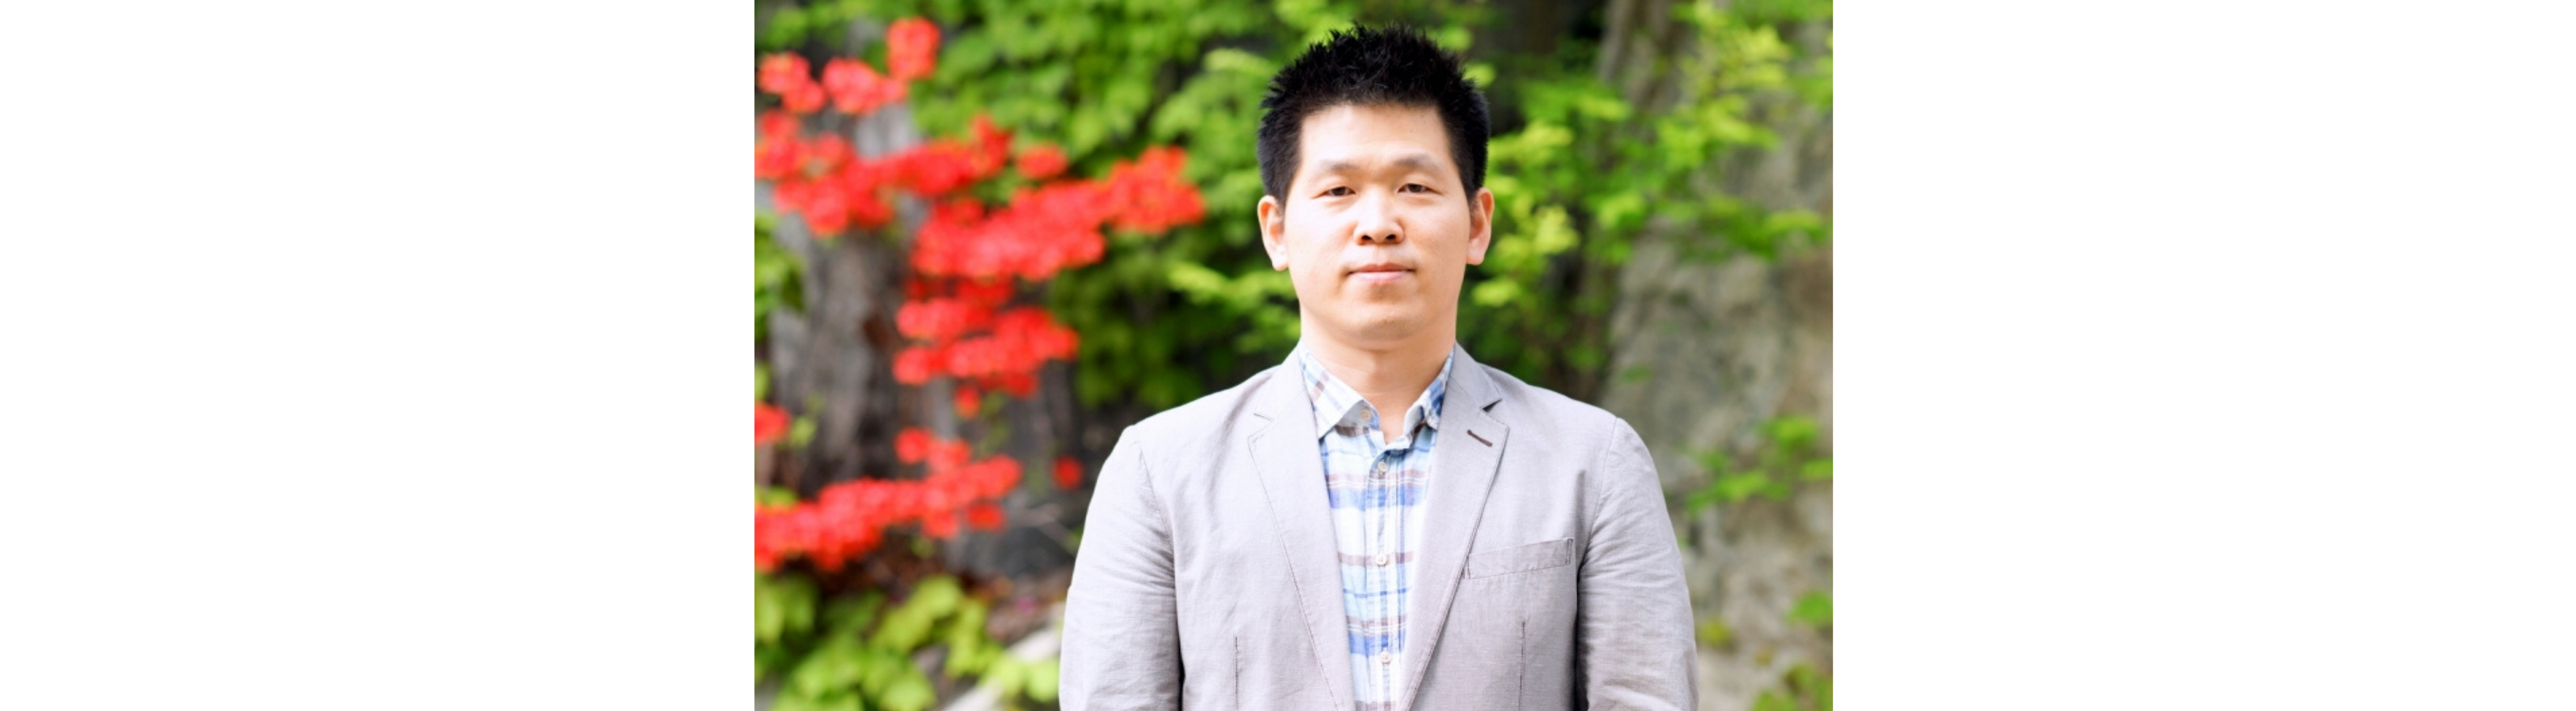 Alumni Kaleidoscope: Yo-Sub Han - PhD(COMP), Mphil(COMP)